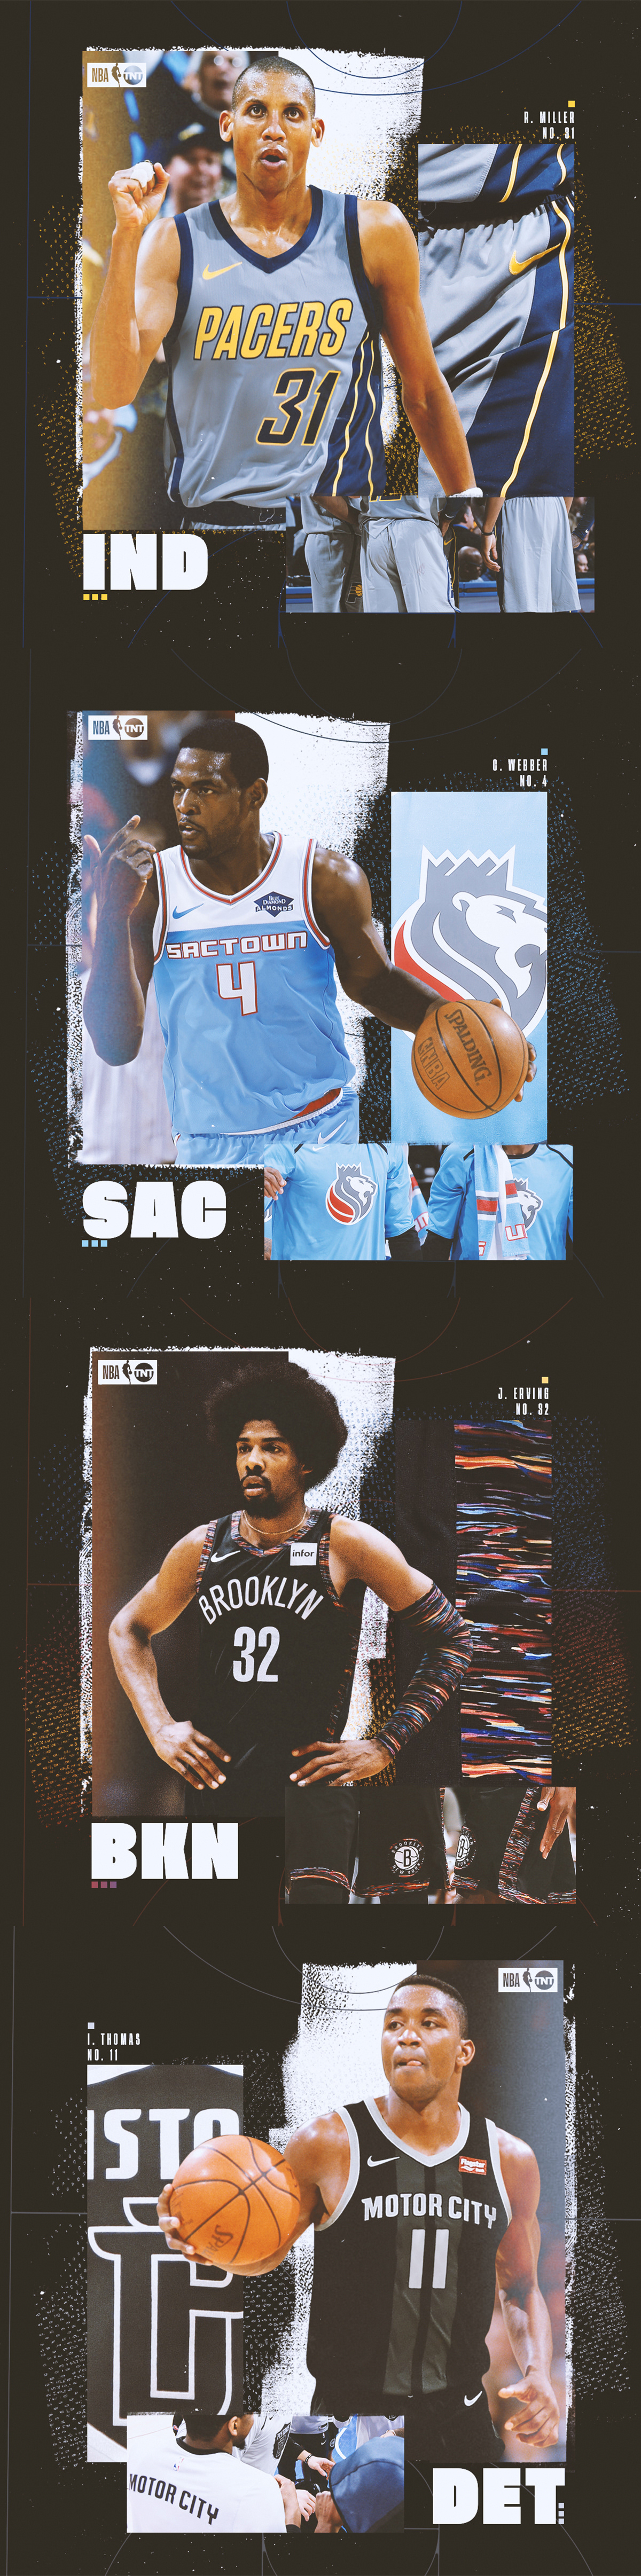 Nike basketball SMSports NBA kobe Shaq NBA on TNT collage Sports Design Michael Jordan